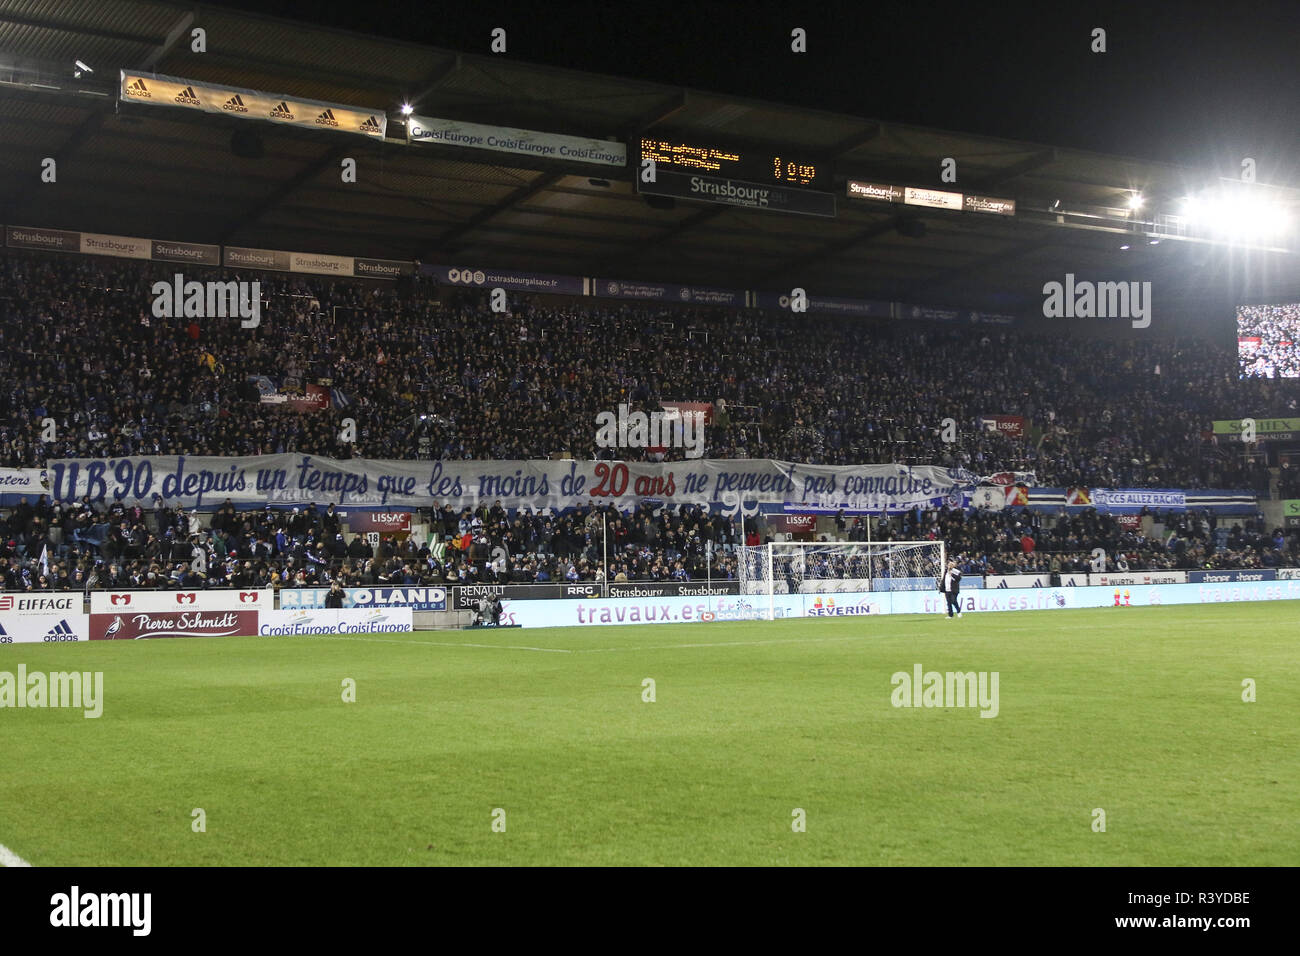 Meinau stadium hi-res stock photography and images - Alamy